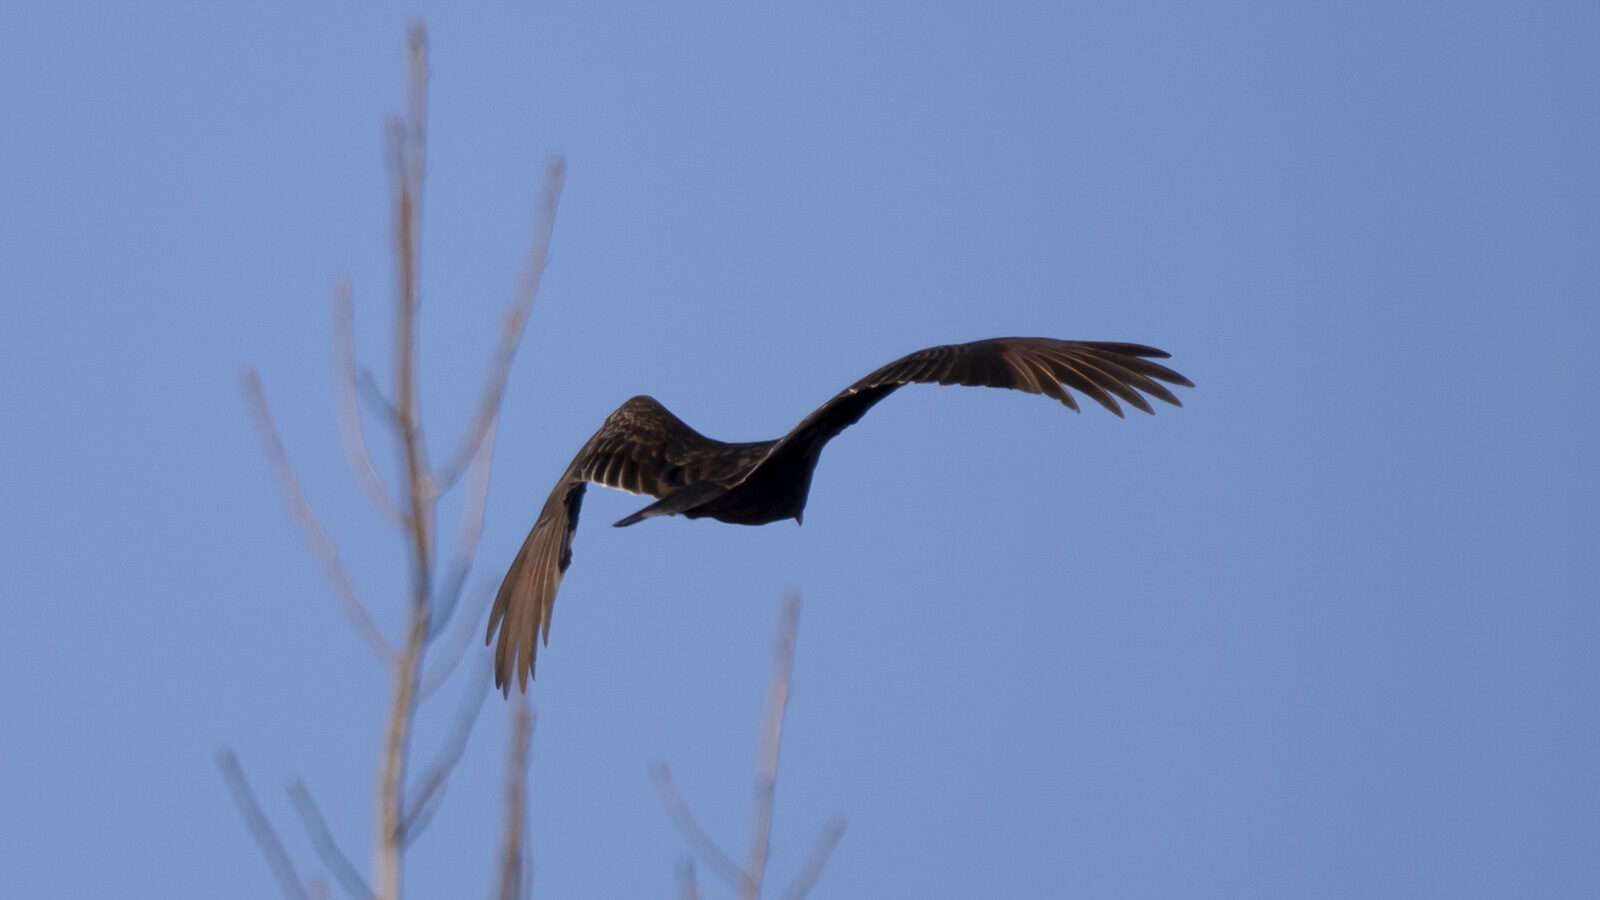 Turkey vulture flying in a blue sky